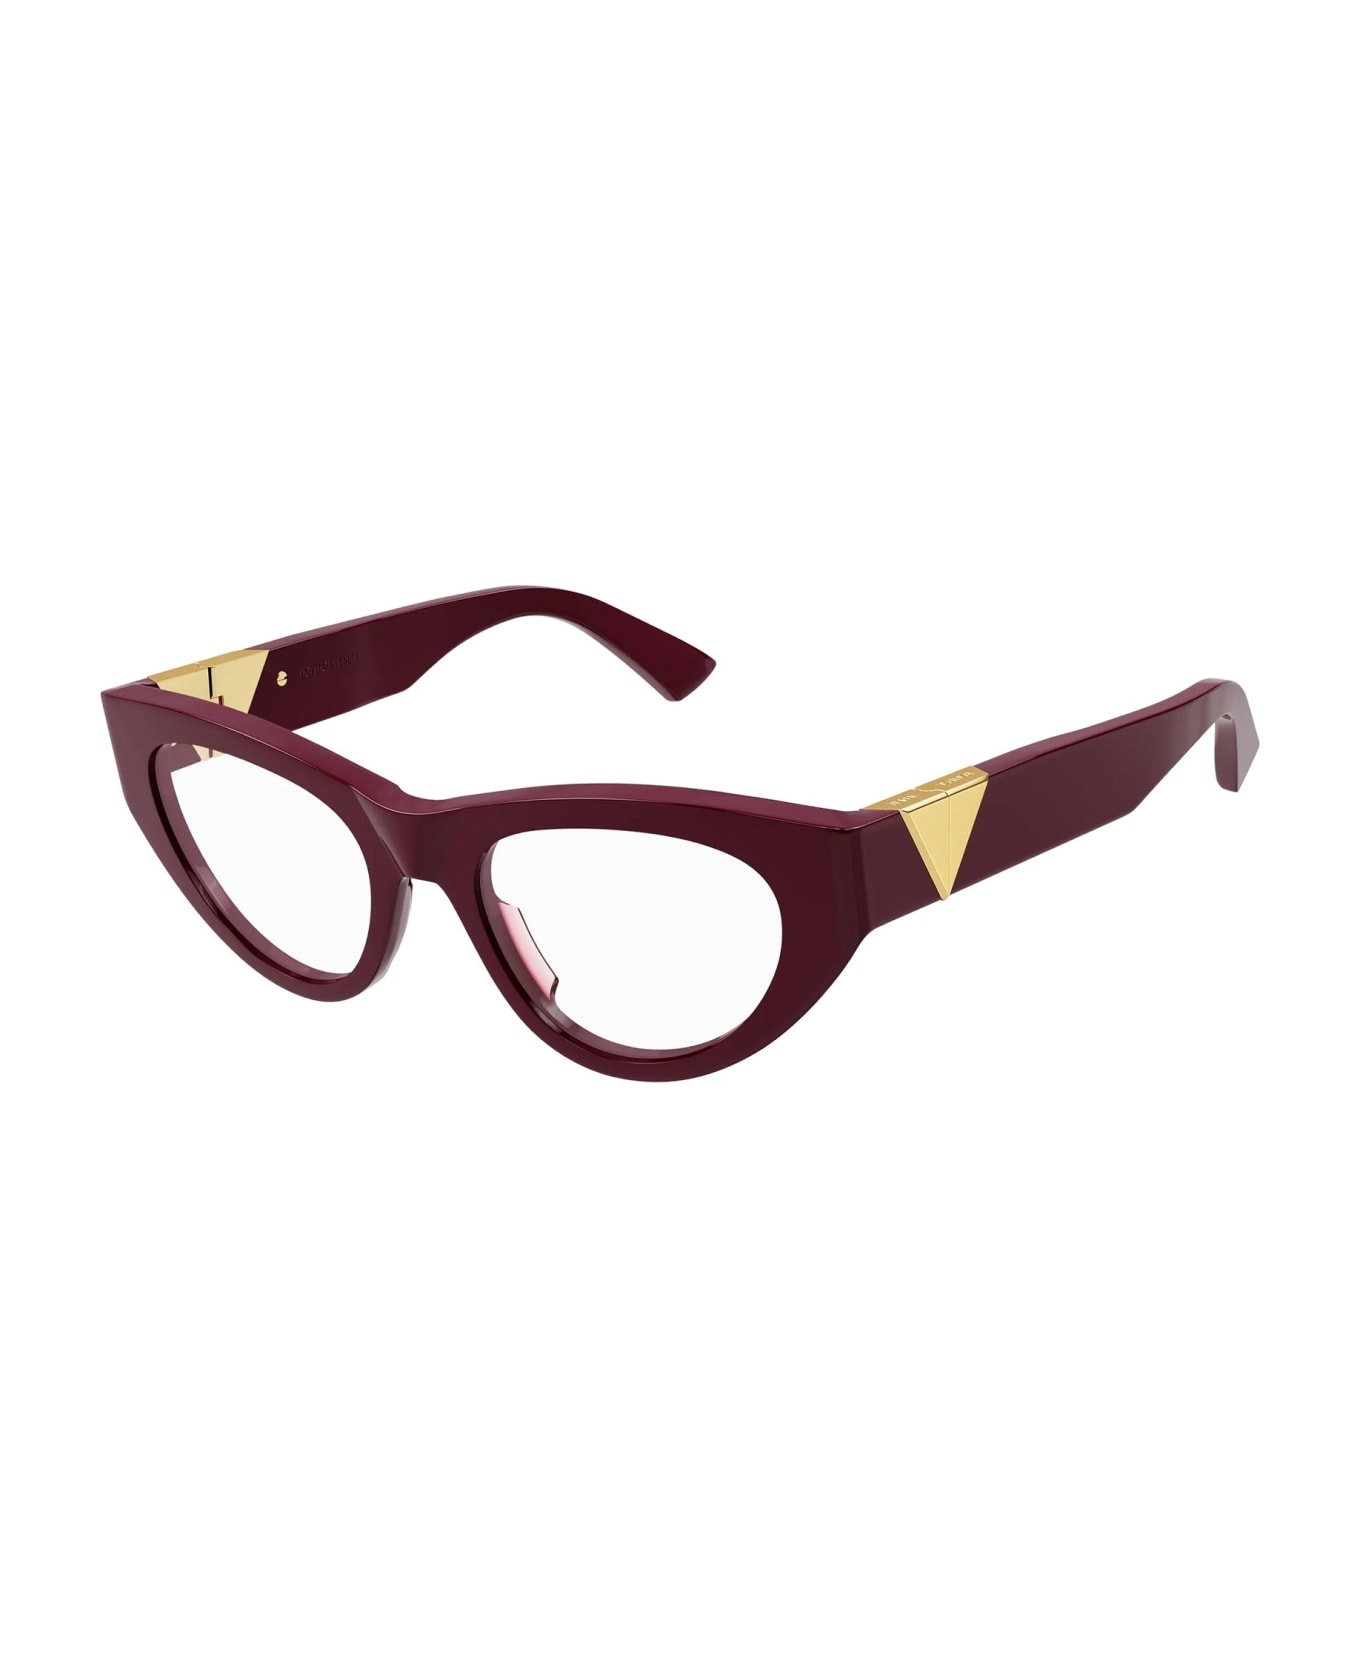 Bottega Veneta Eyewear Bv1179o-003 - Burgundy Glasses